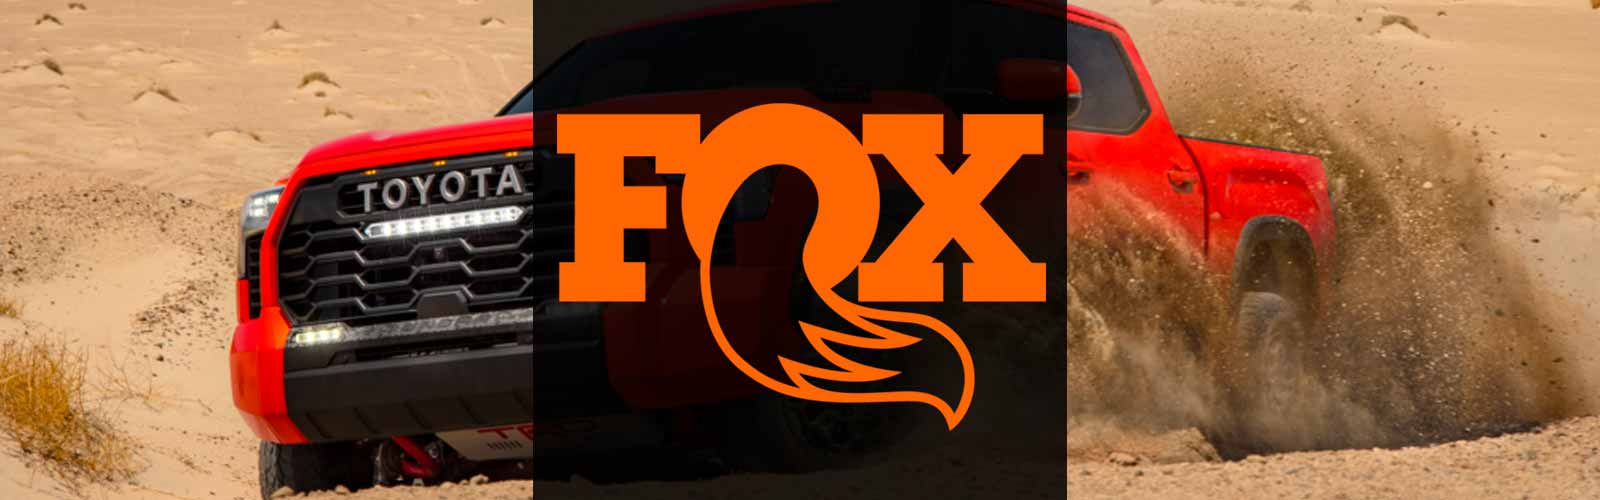 FOX Suspension for Toyota Trucks and SUV's